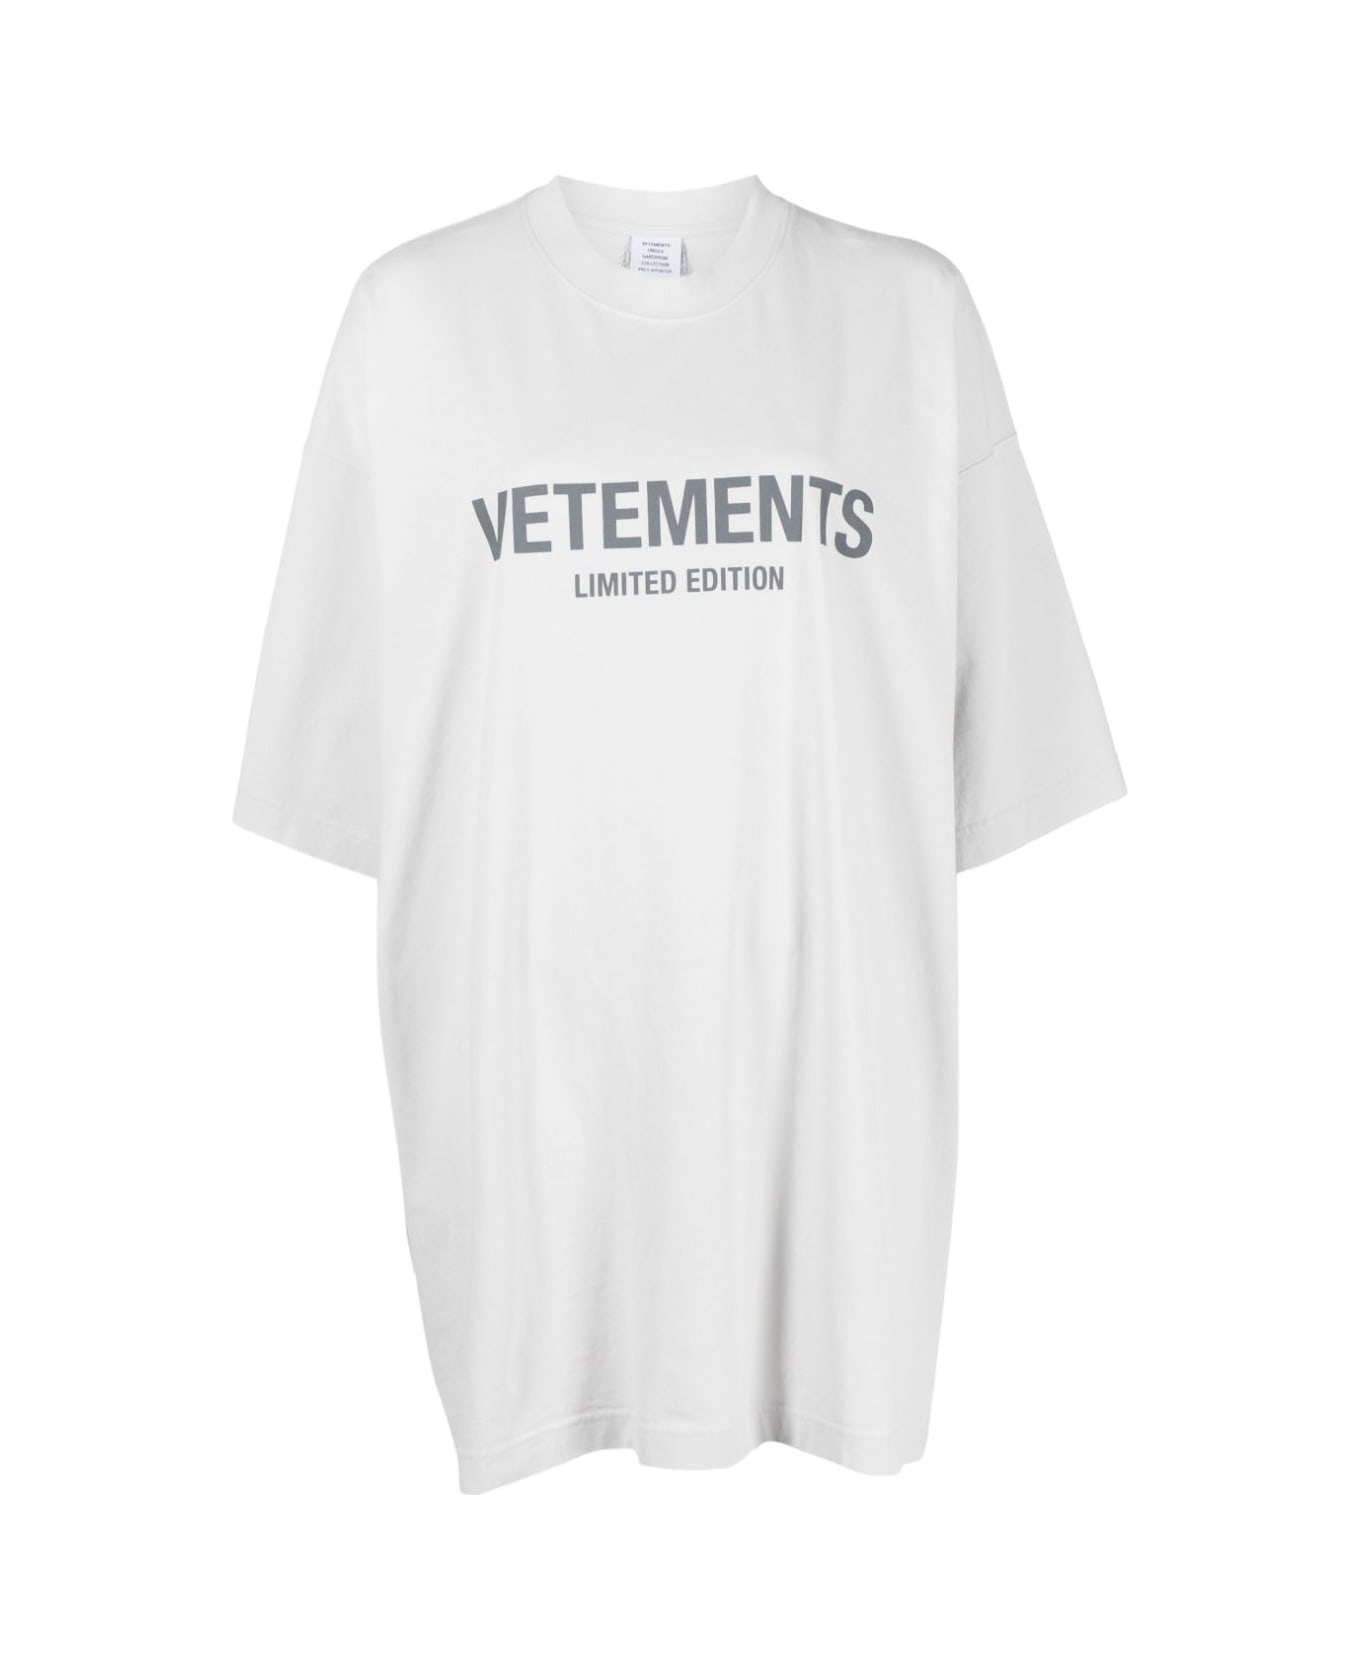 VETEMENTS Limited Edition Logo T-shirt - Oyster Mushroom Tシャツ